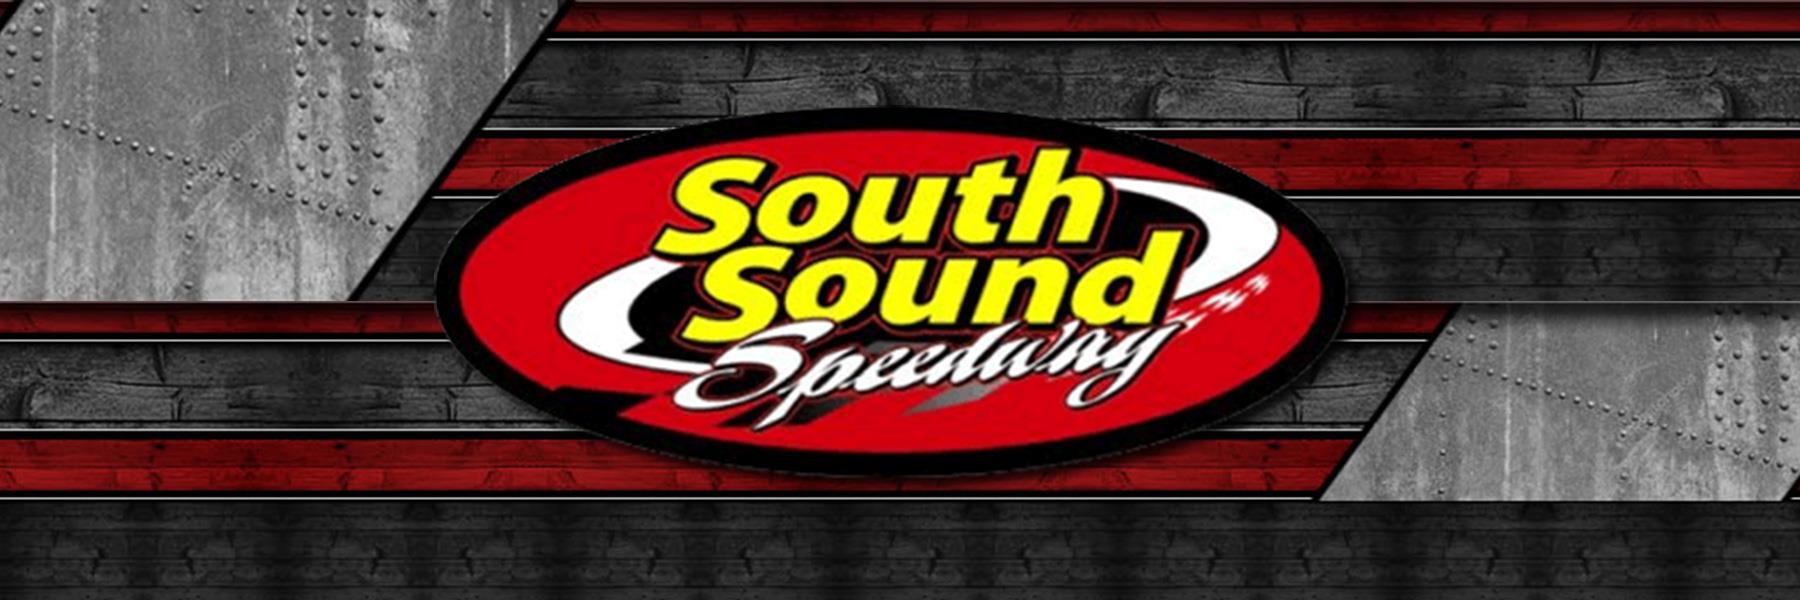 7/31/2021 - South Sound Speedway